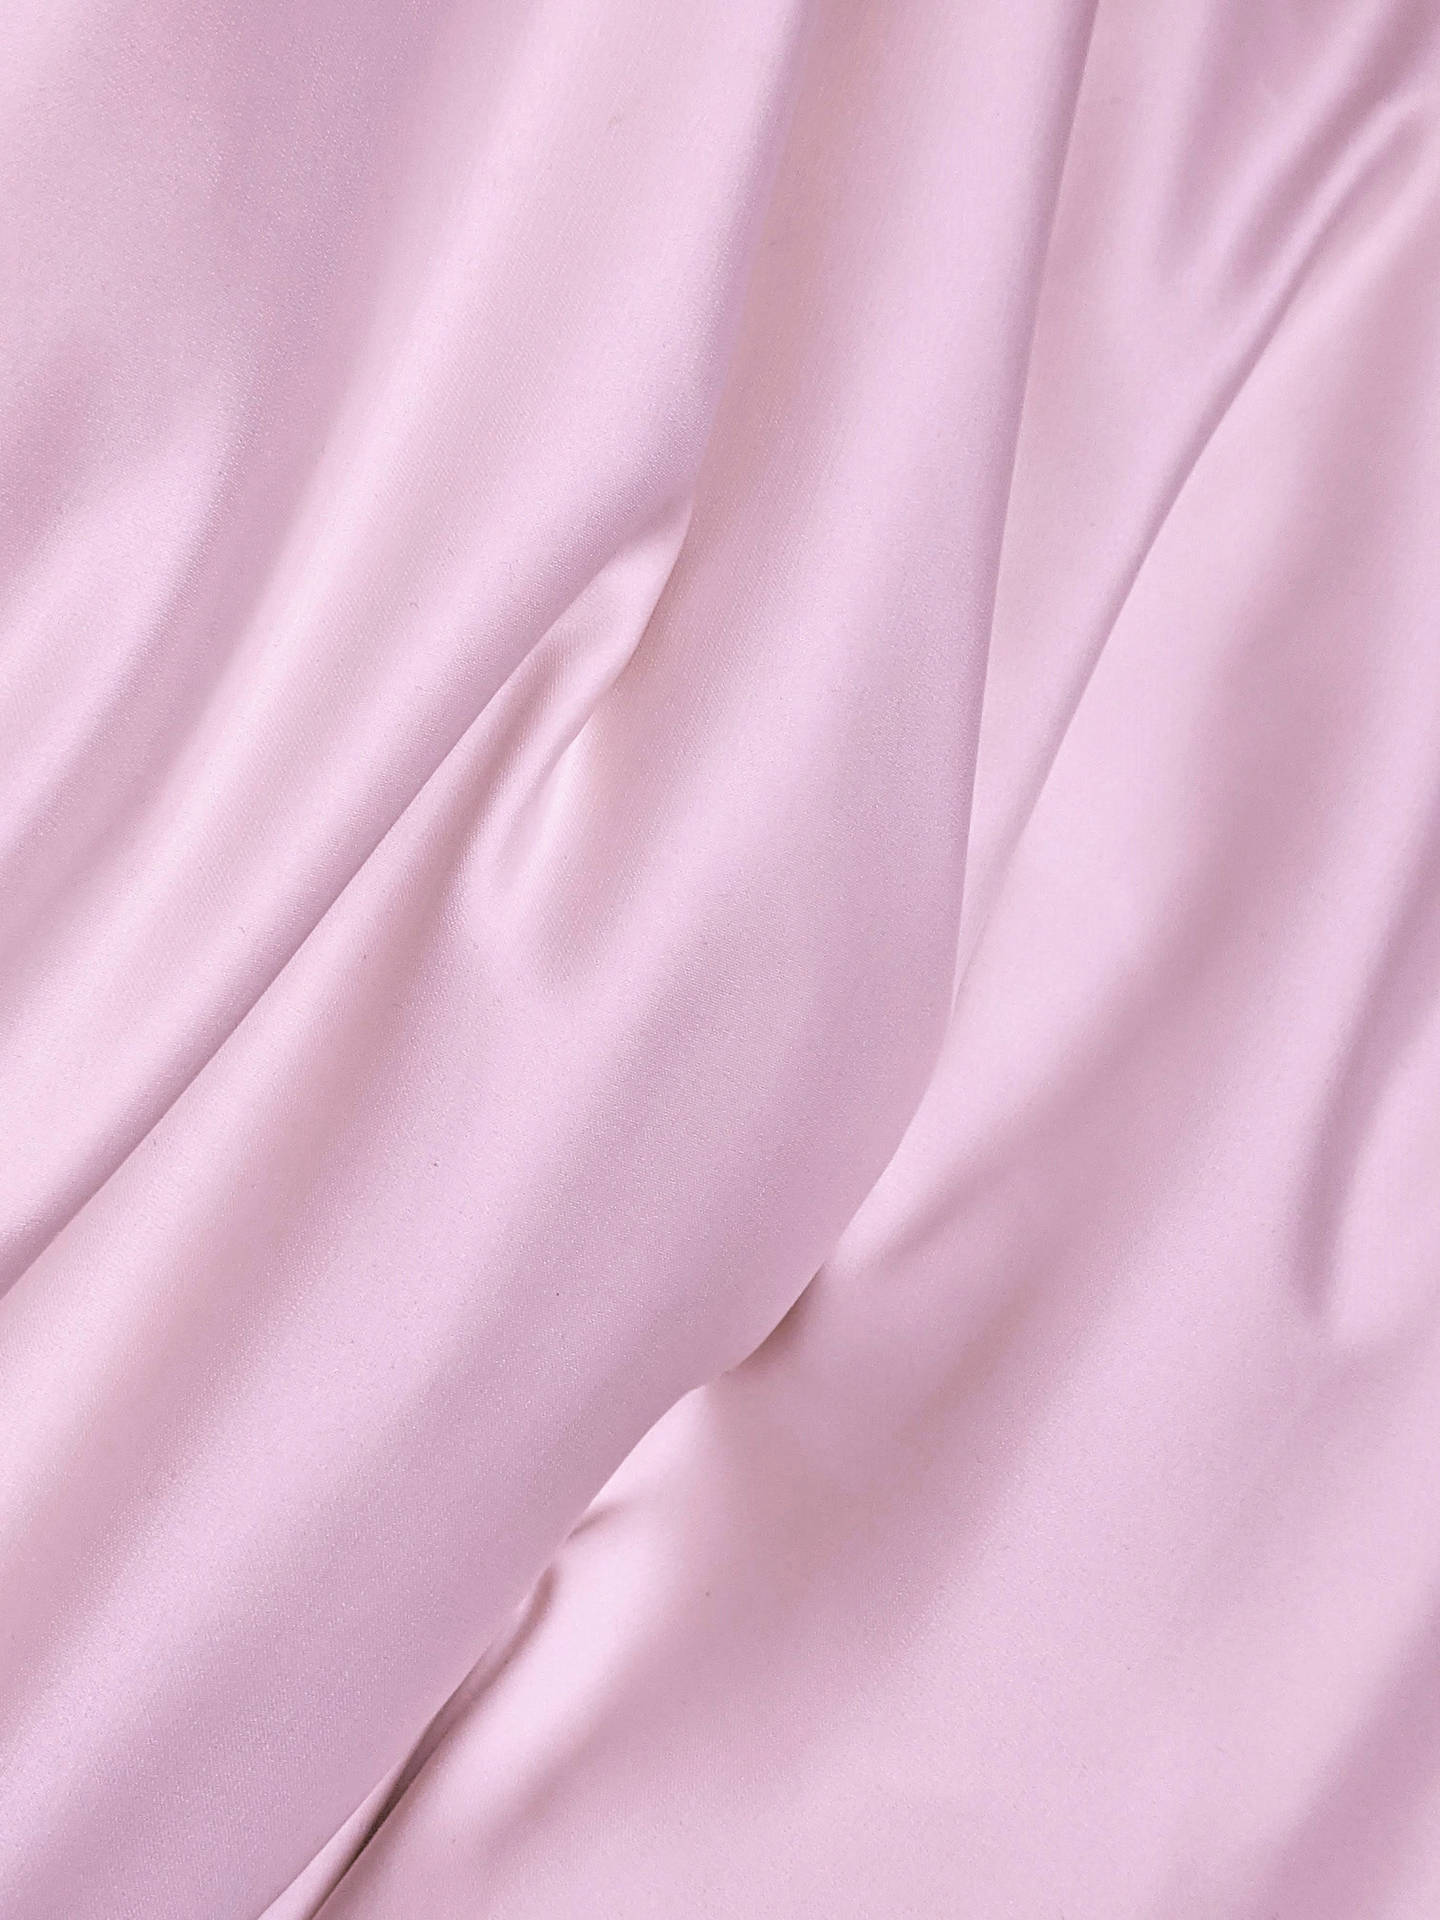 Baby Pink Silk Fabric Background